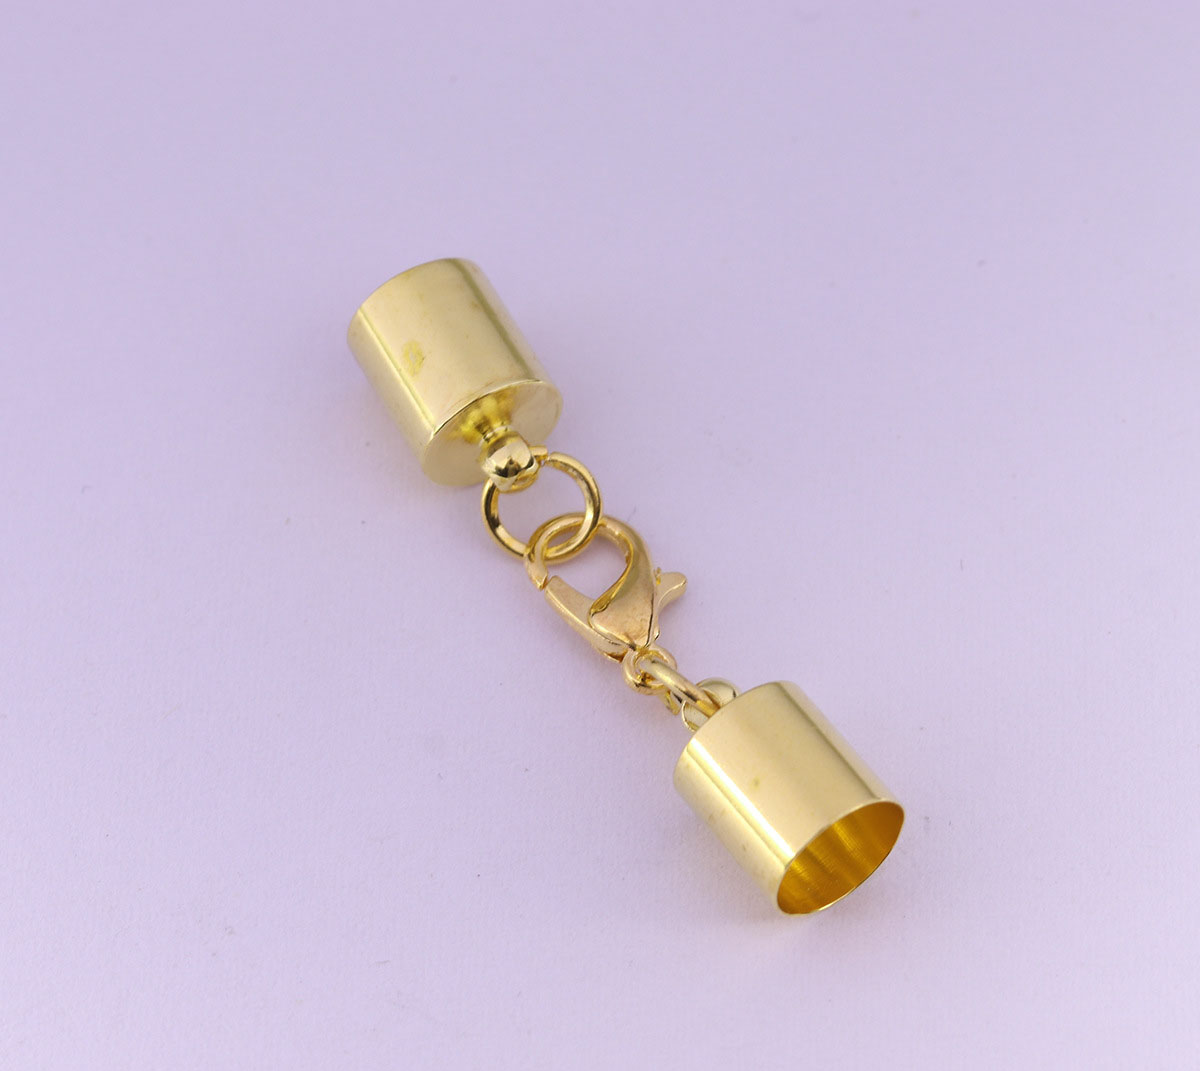 gold color plated, Outside diameter : 10mm, diamet